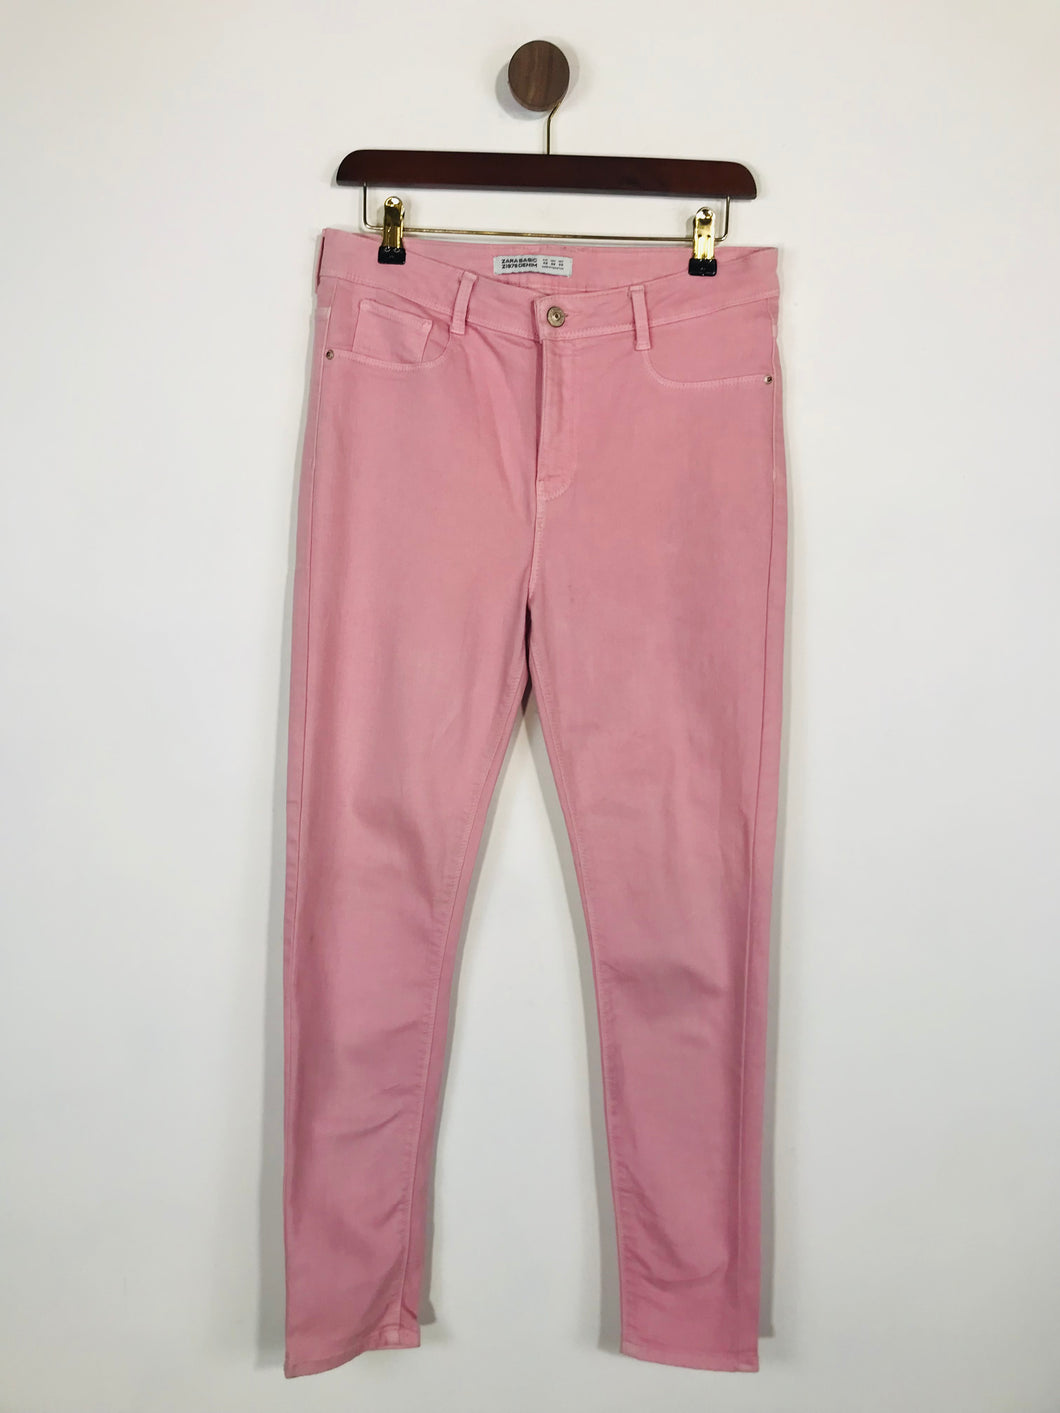 Zara Women's Cotton Stretchy Slim Jeans | EU40 UK12 | Pink